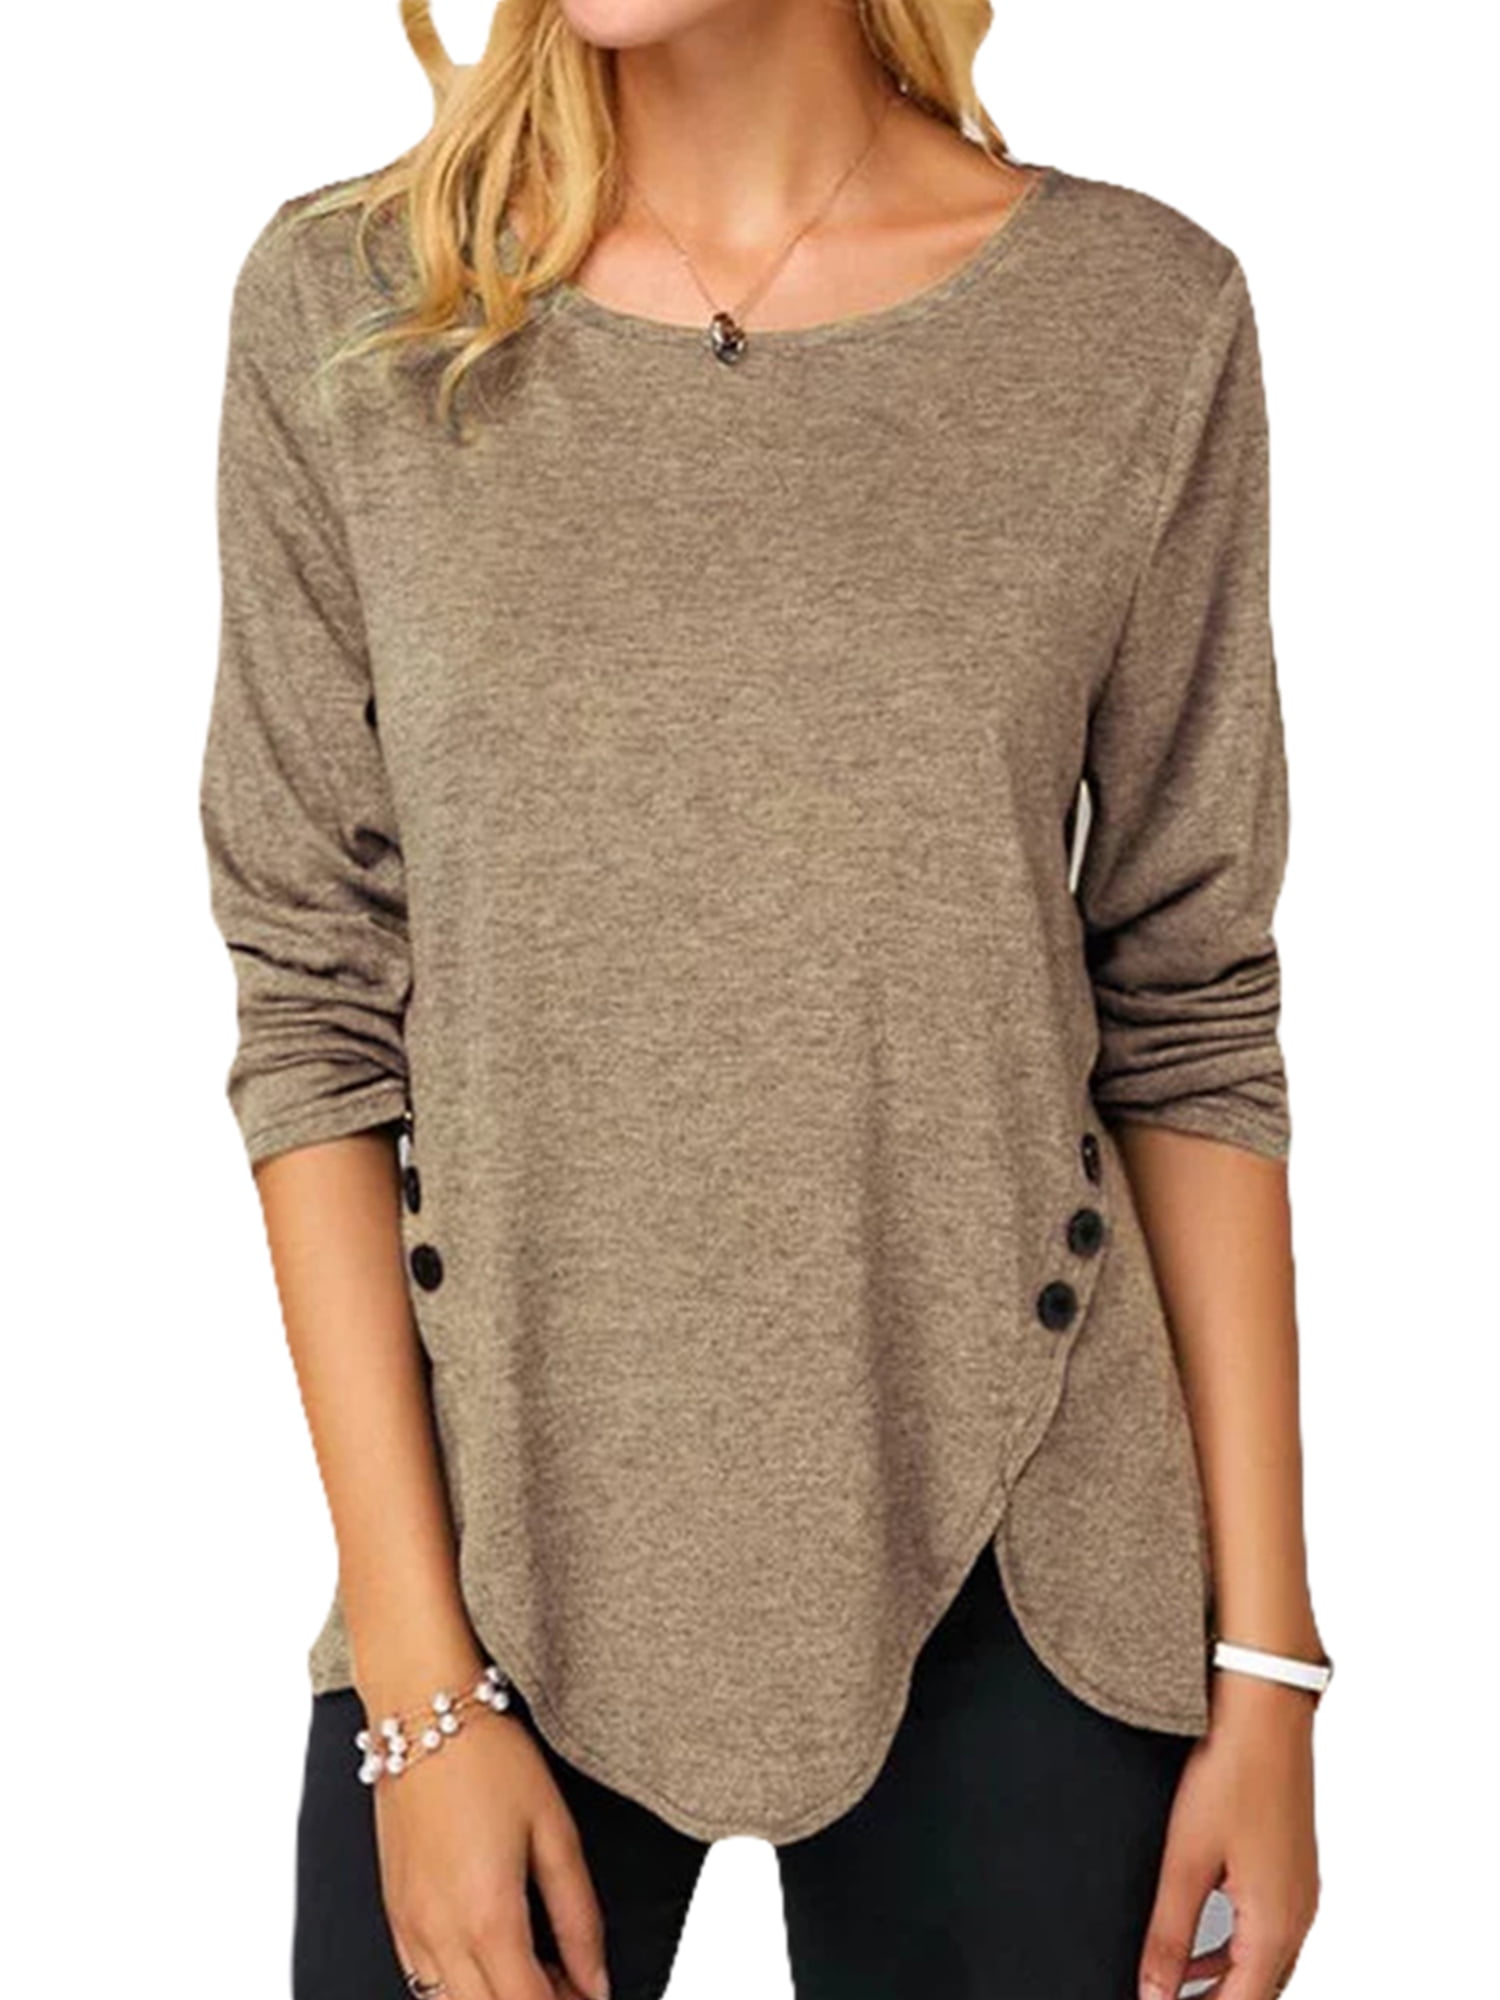 Eoeth Blouse Tops for Women Autumn Solid Color O Neck Long Sleeve Fold Split Shirts Casual Loose Irregular Hem T-Shirts 